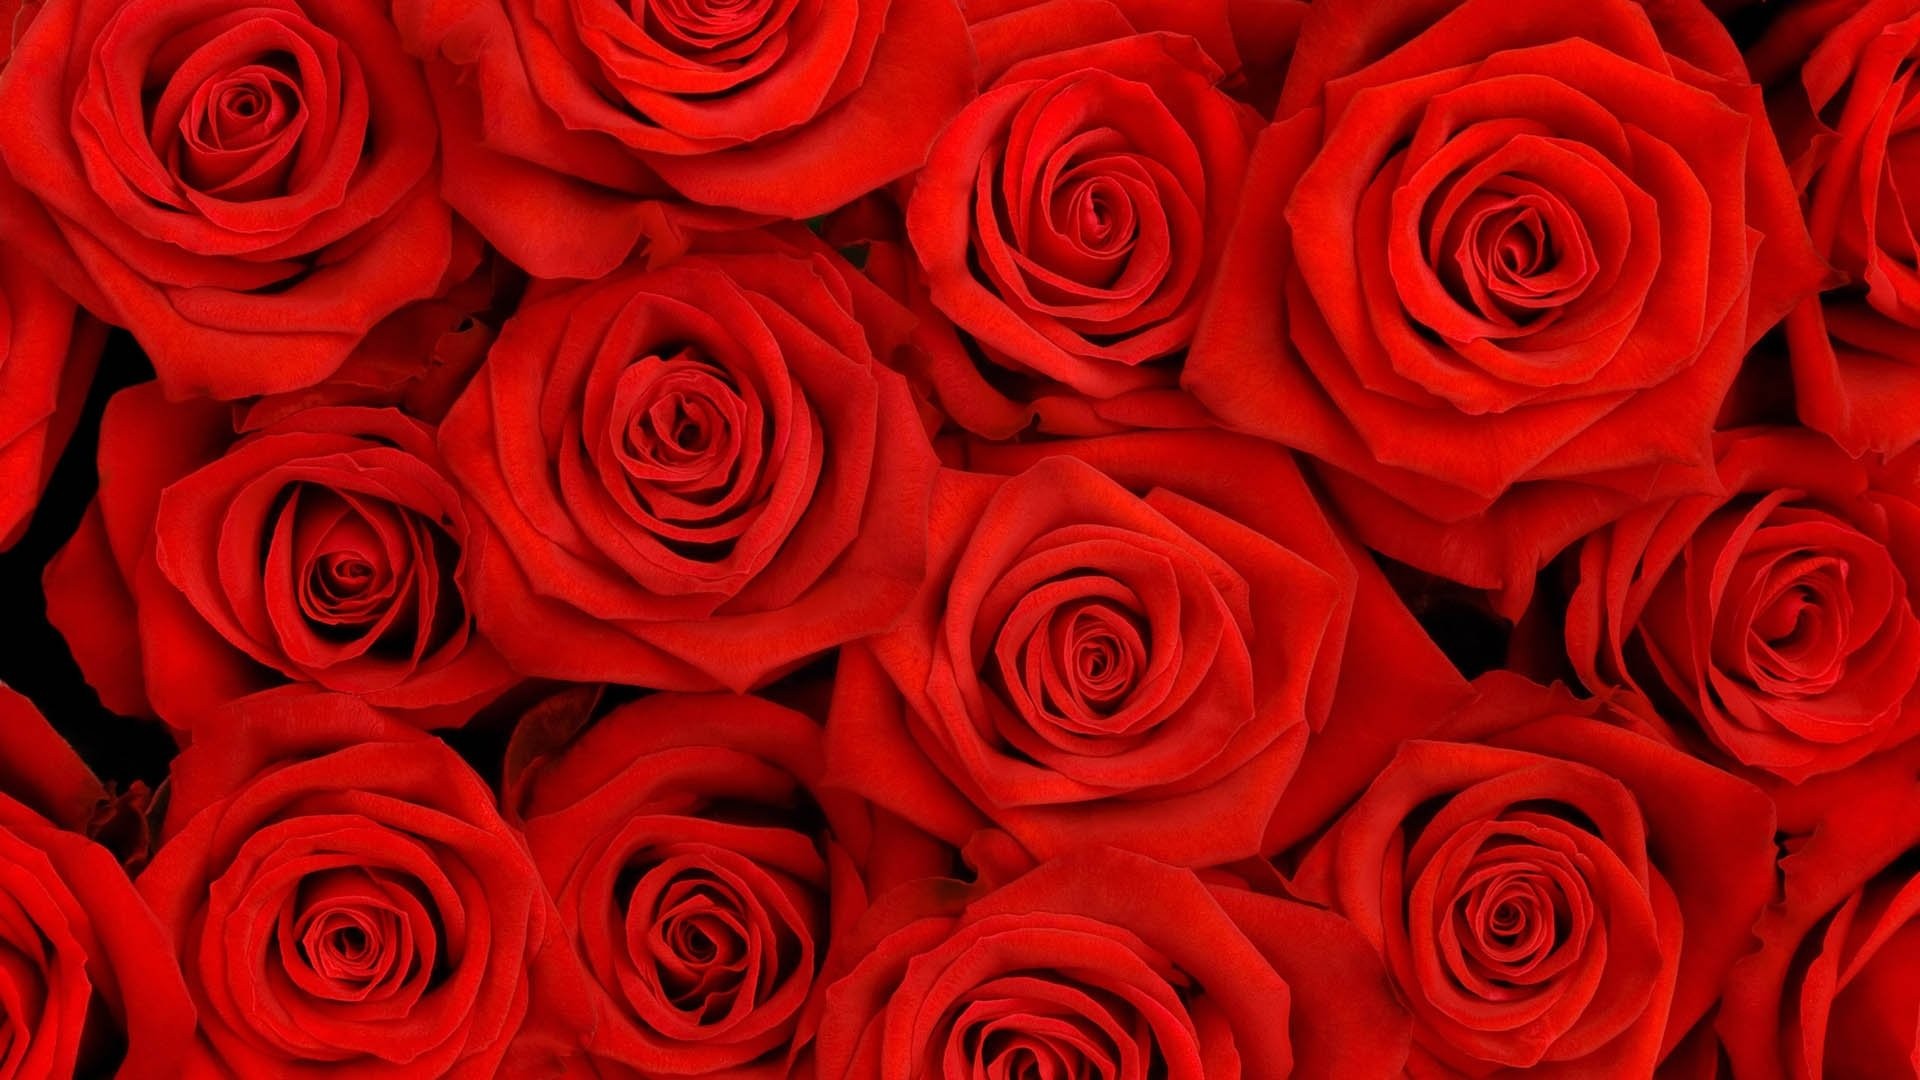 Flowers: Roses Flower Red Petals Hd Nature Desktop Backgrounds Mac ...